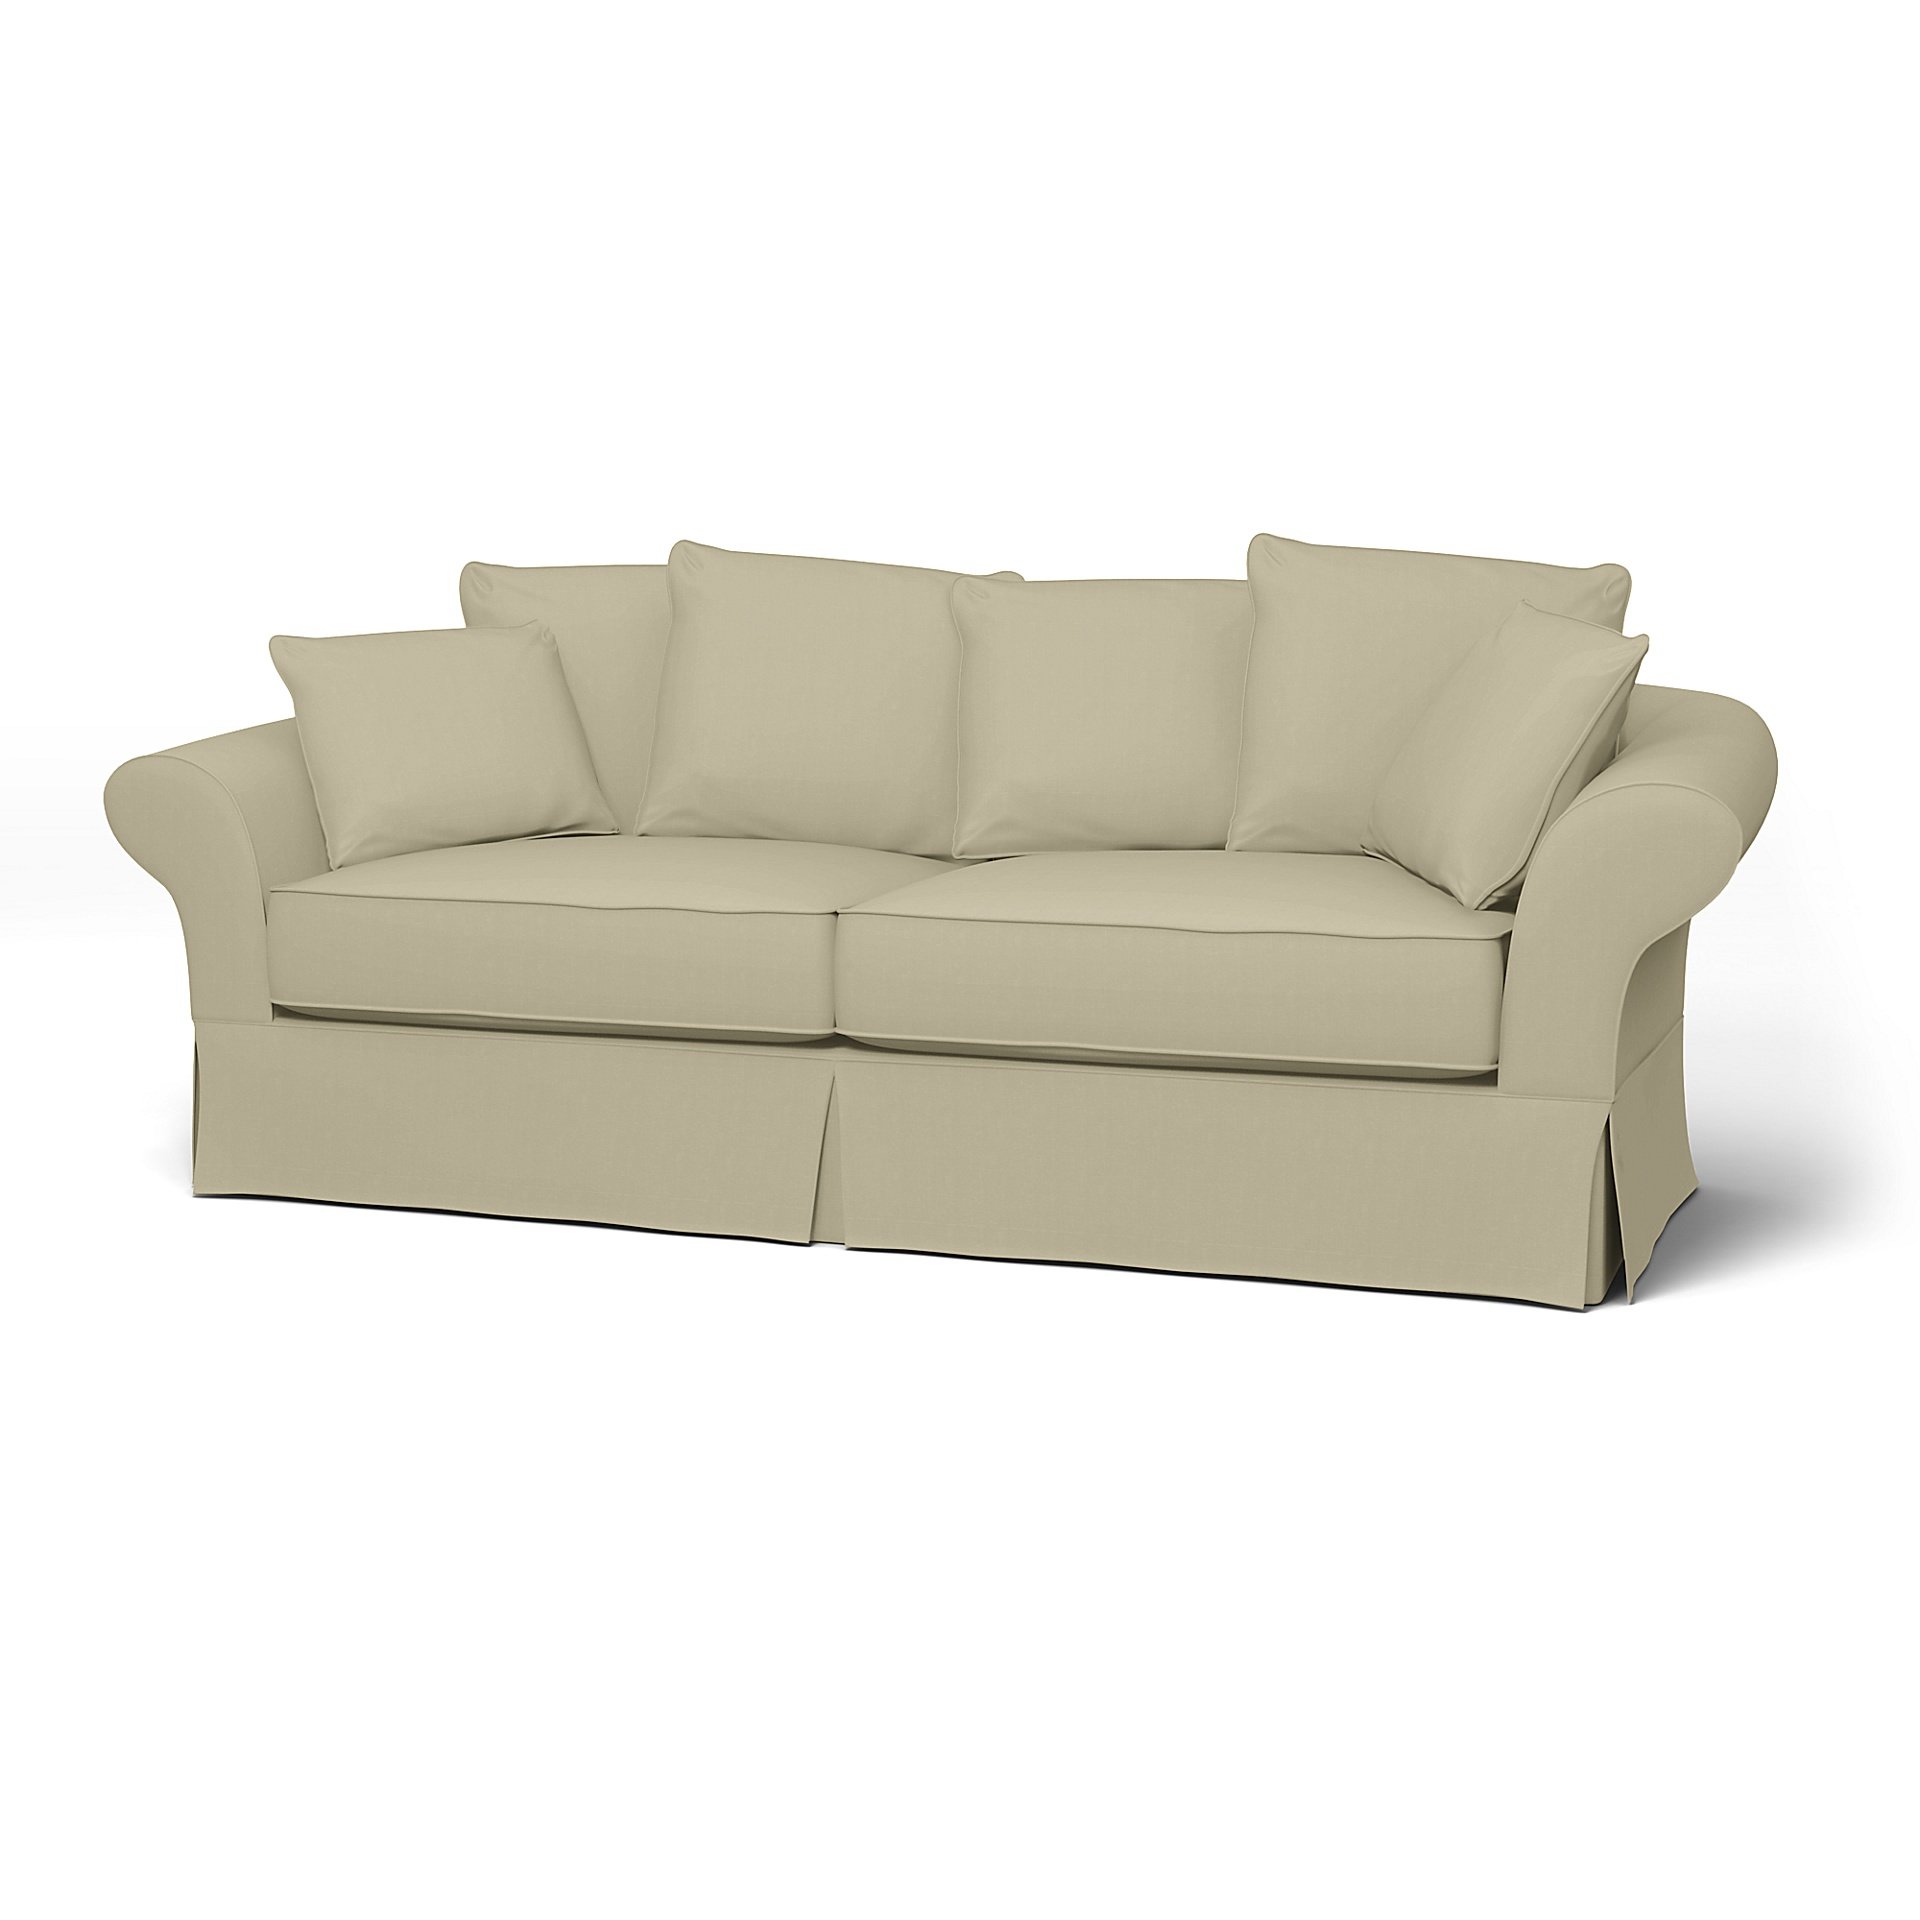 IKEA - Backamo 3 Seater Sofa Cover, Sand Beige, Cotton - Bemz